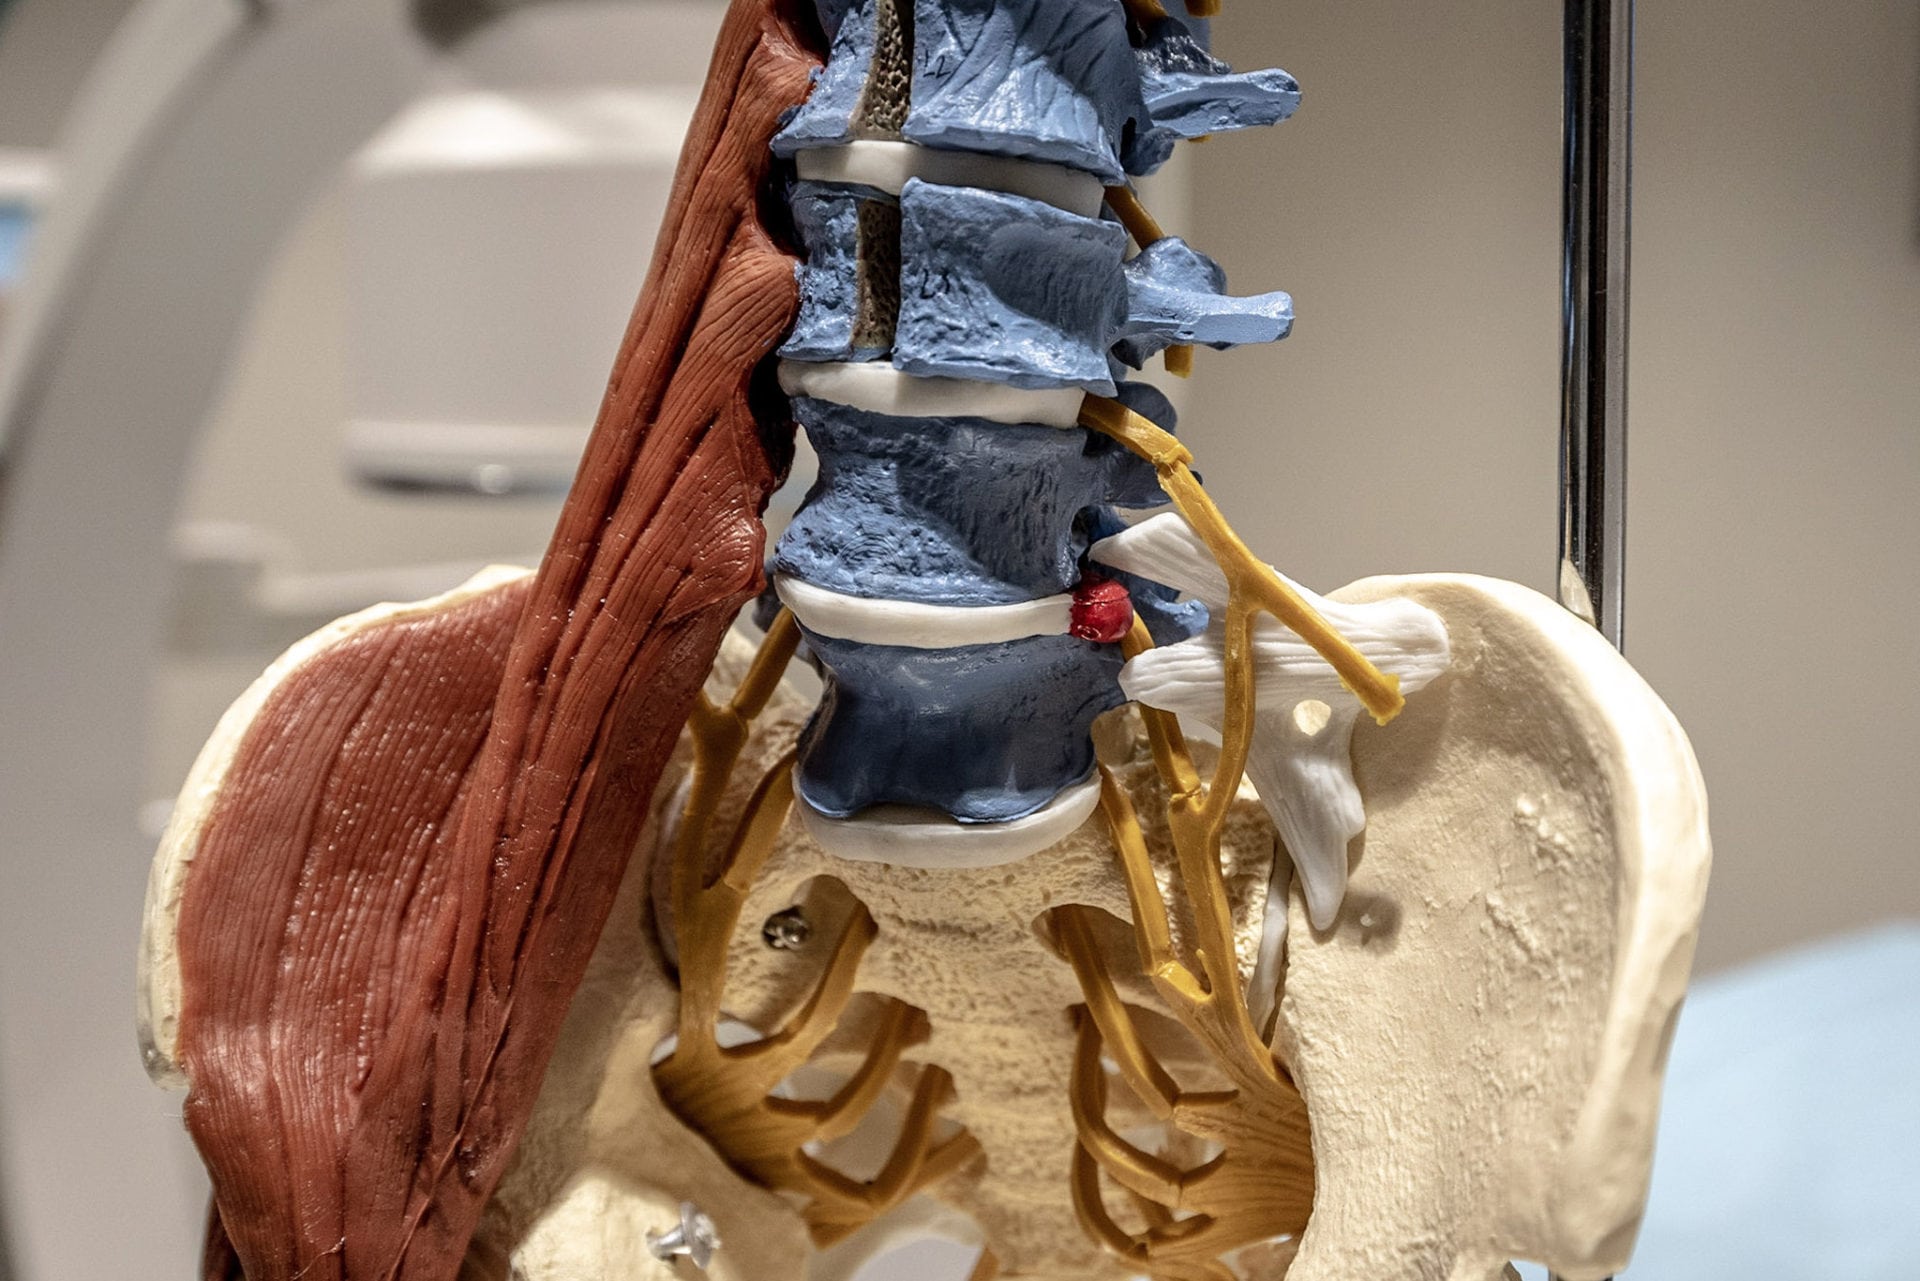 A model of human anatomy